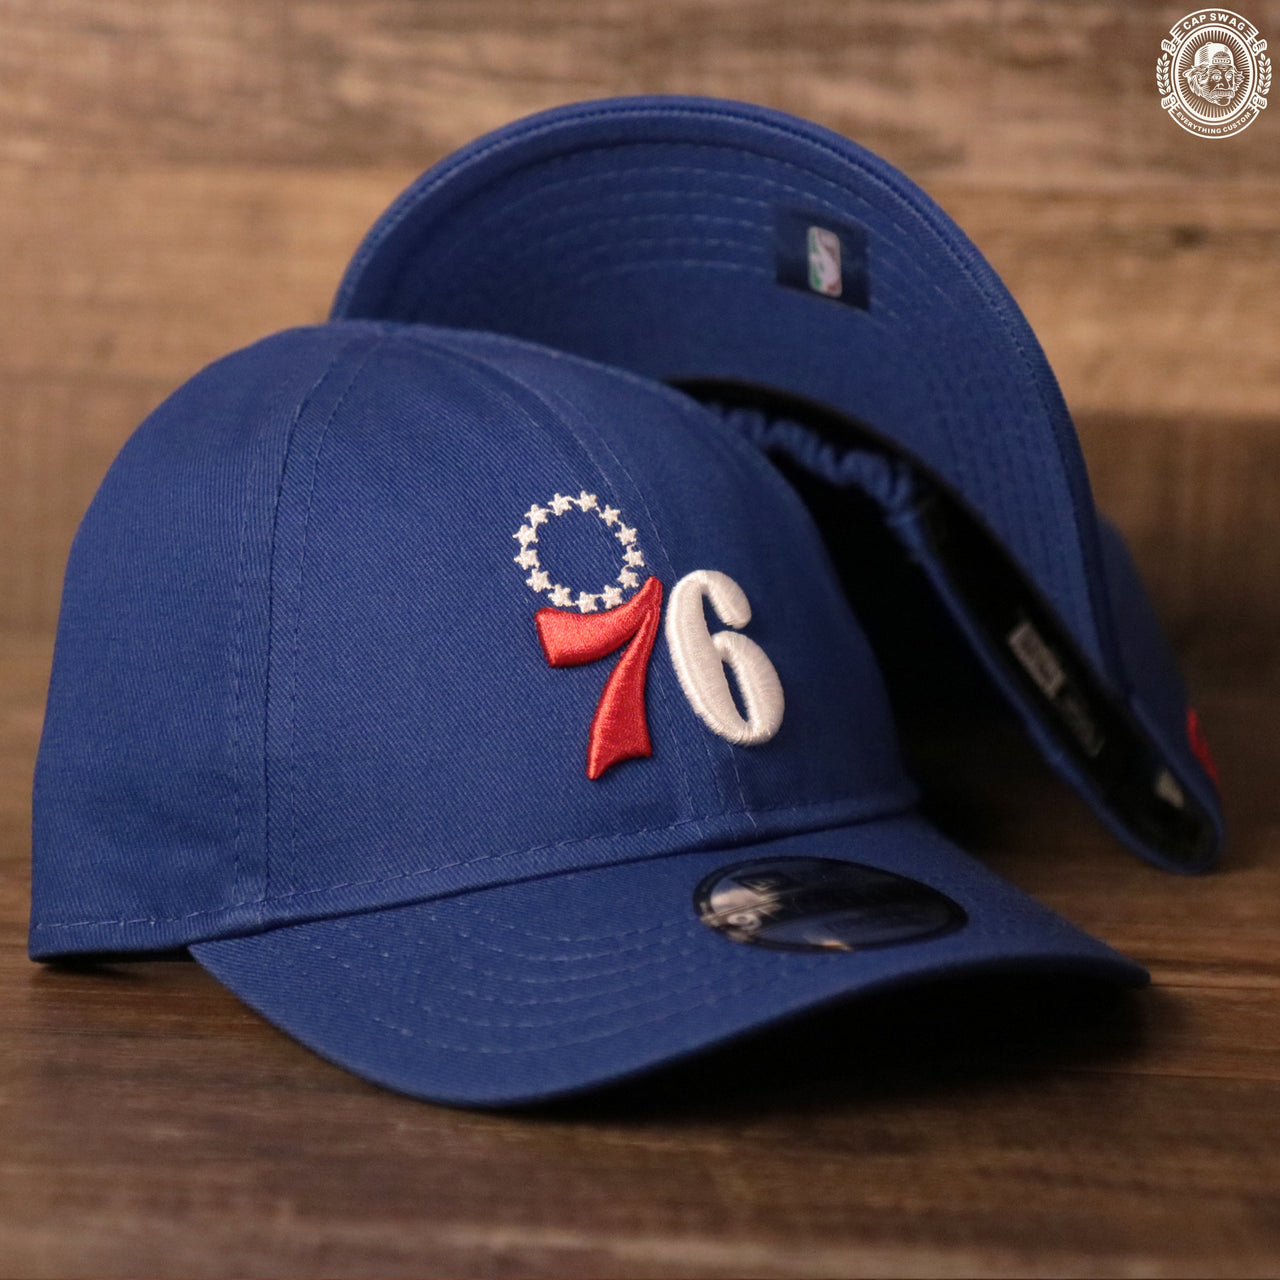 The royal blue Philadelphia 76ers infant dad hat by New Era.